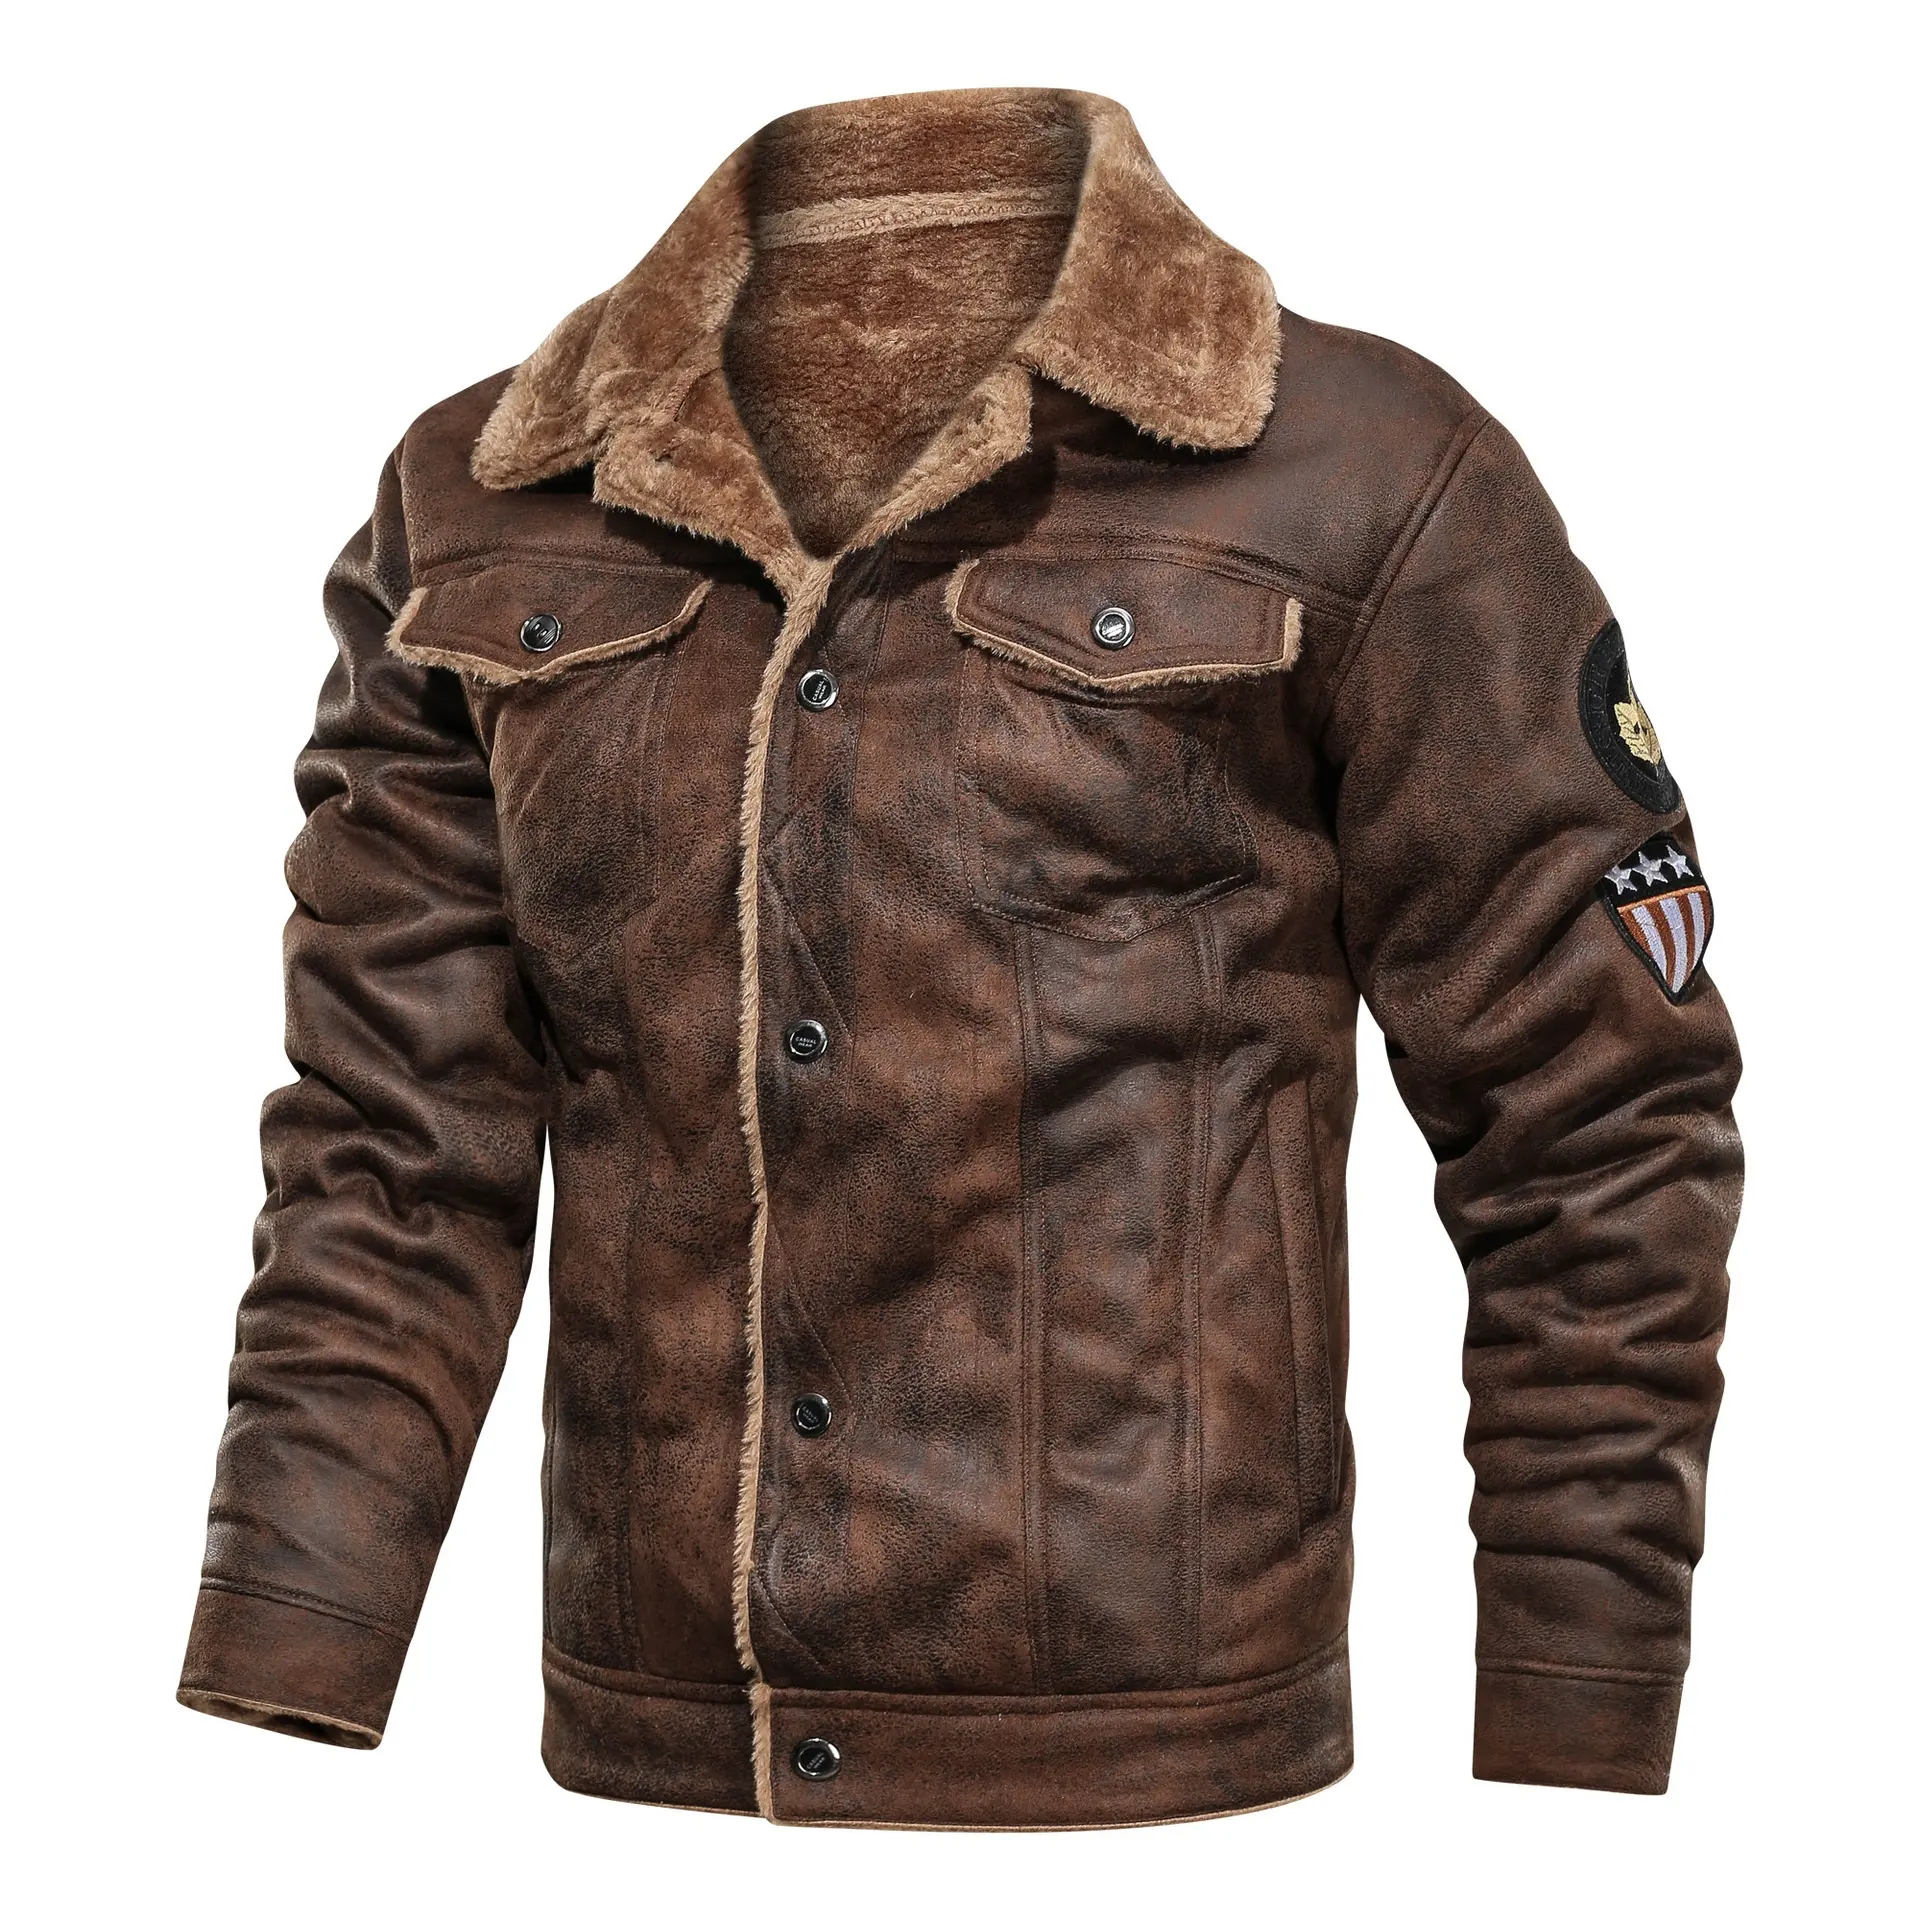 Autumn and winter fashion motorcycle jacket outdoor leather plus velvet khaki uniform warm plus size men's jacket